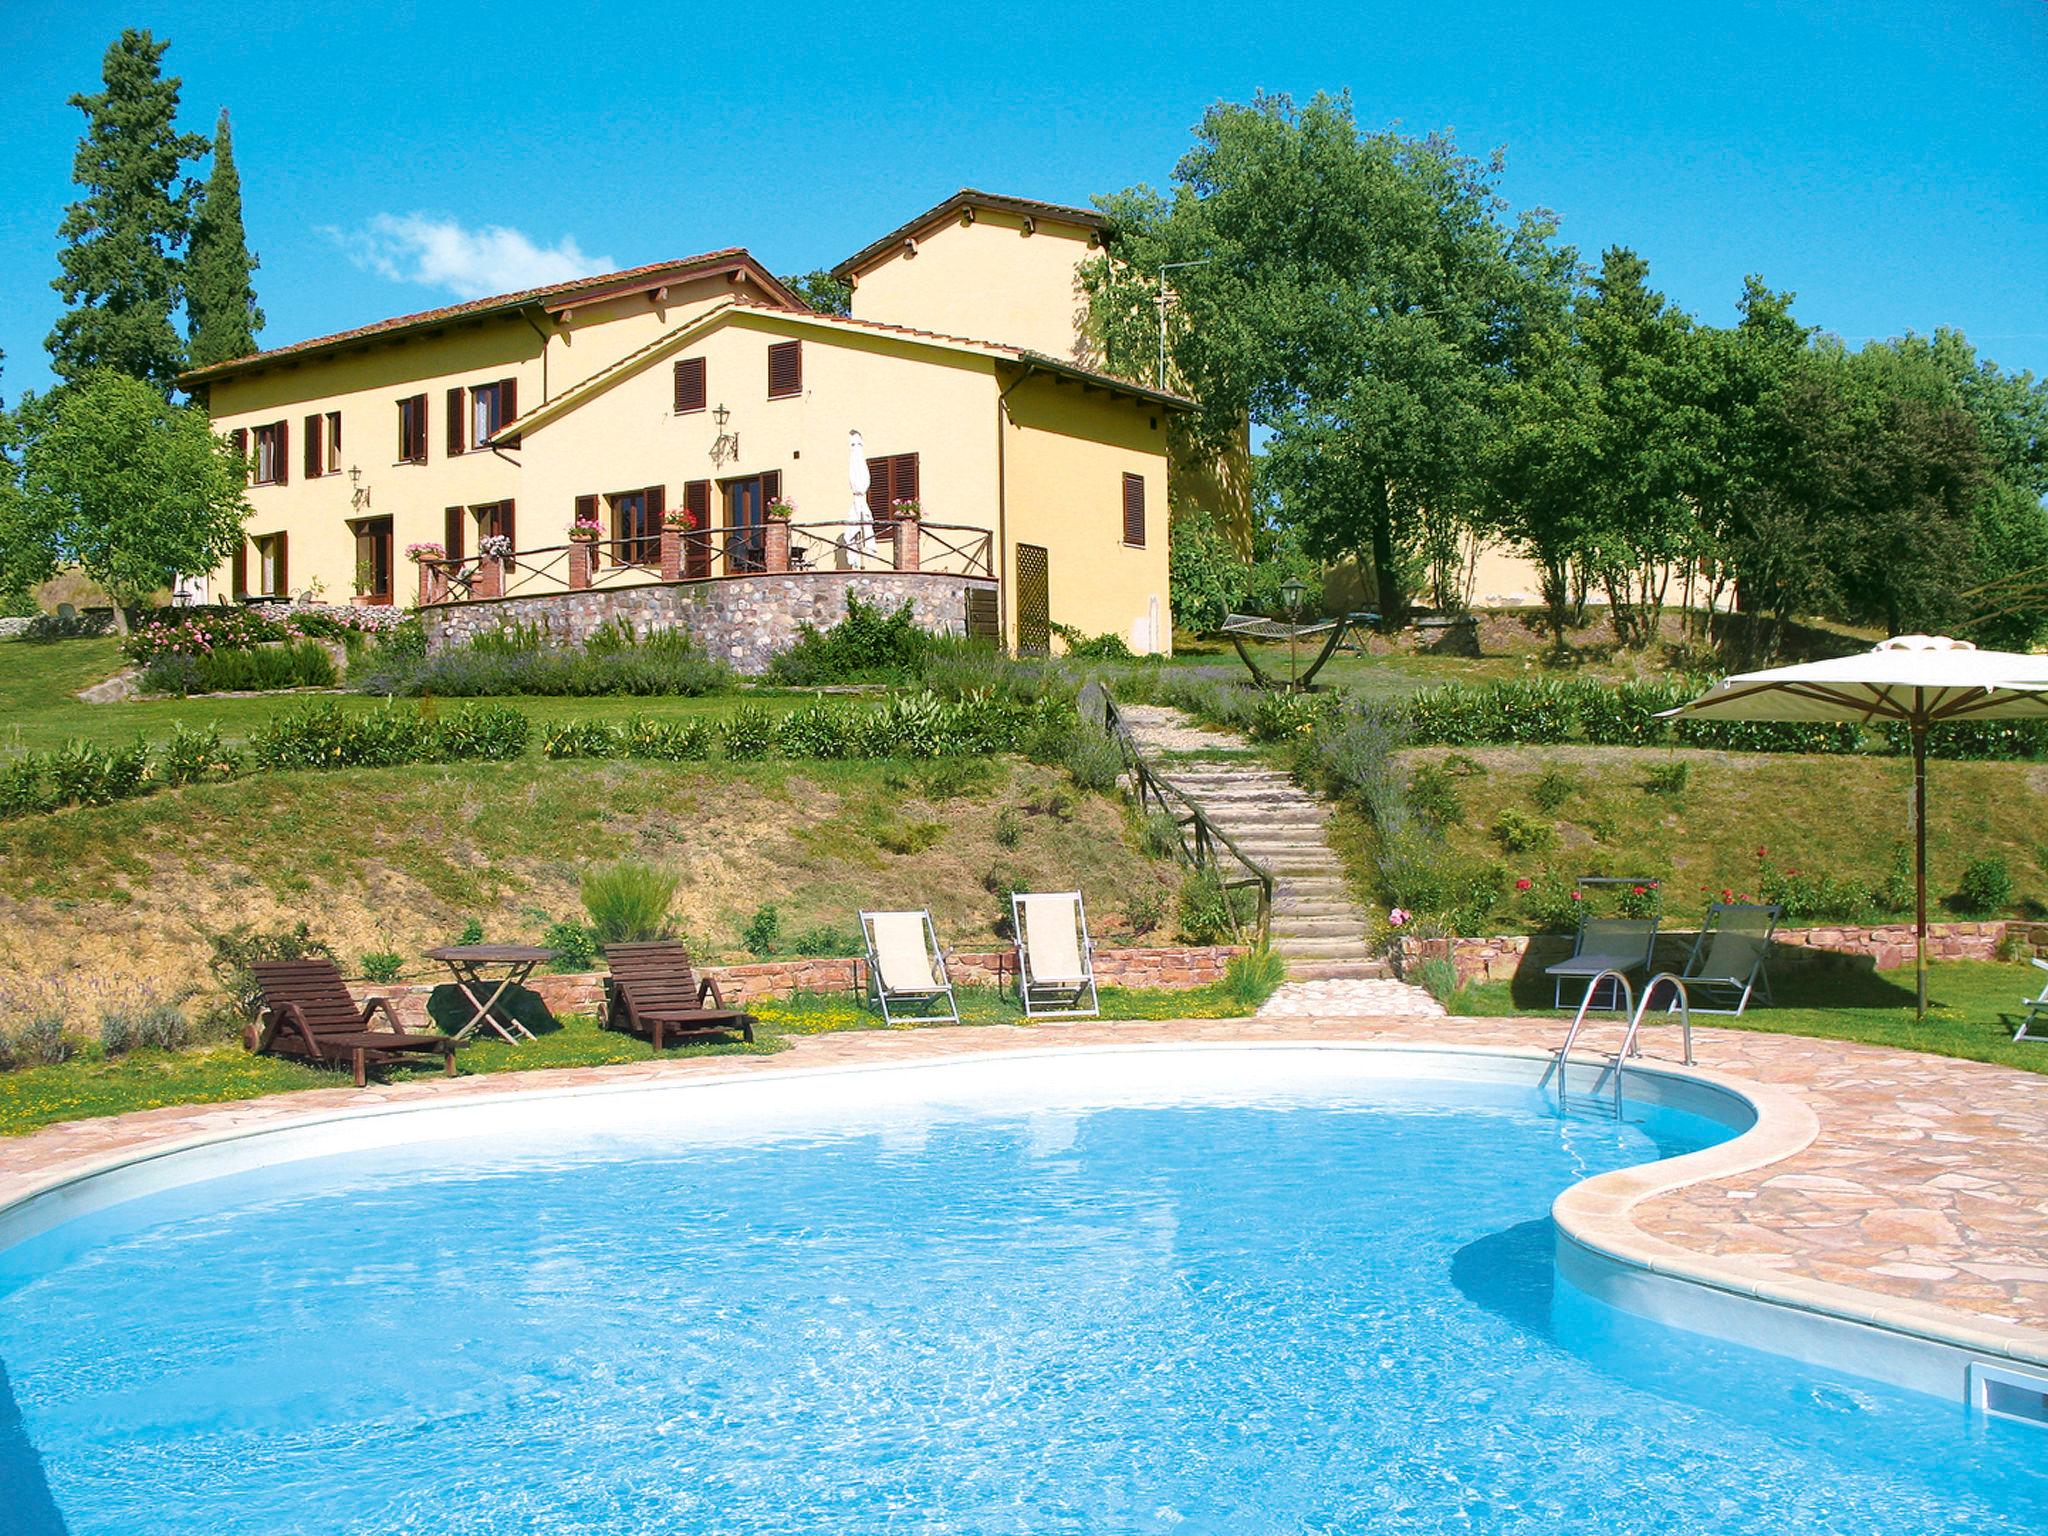 Photo 1 - 11 bedroom House in Terranuova Bracciolini with private pool and garden